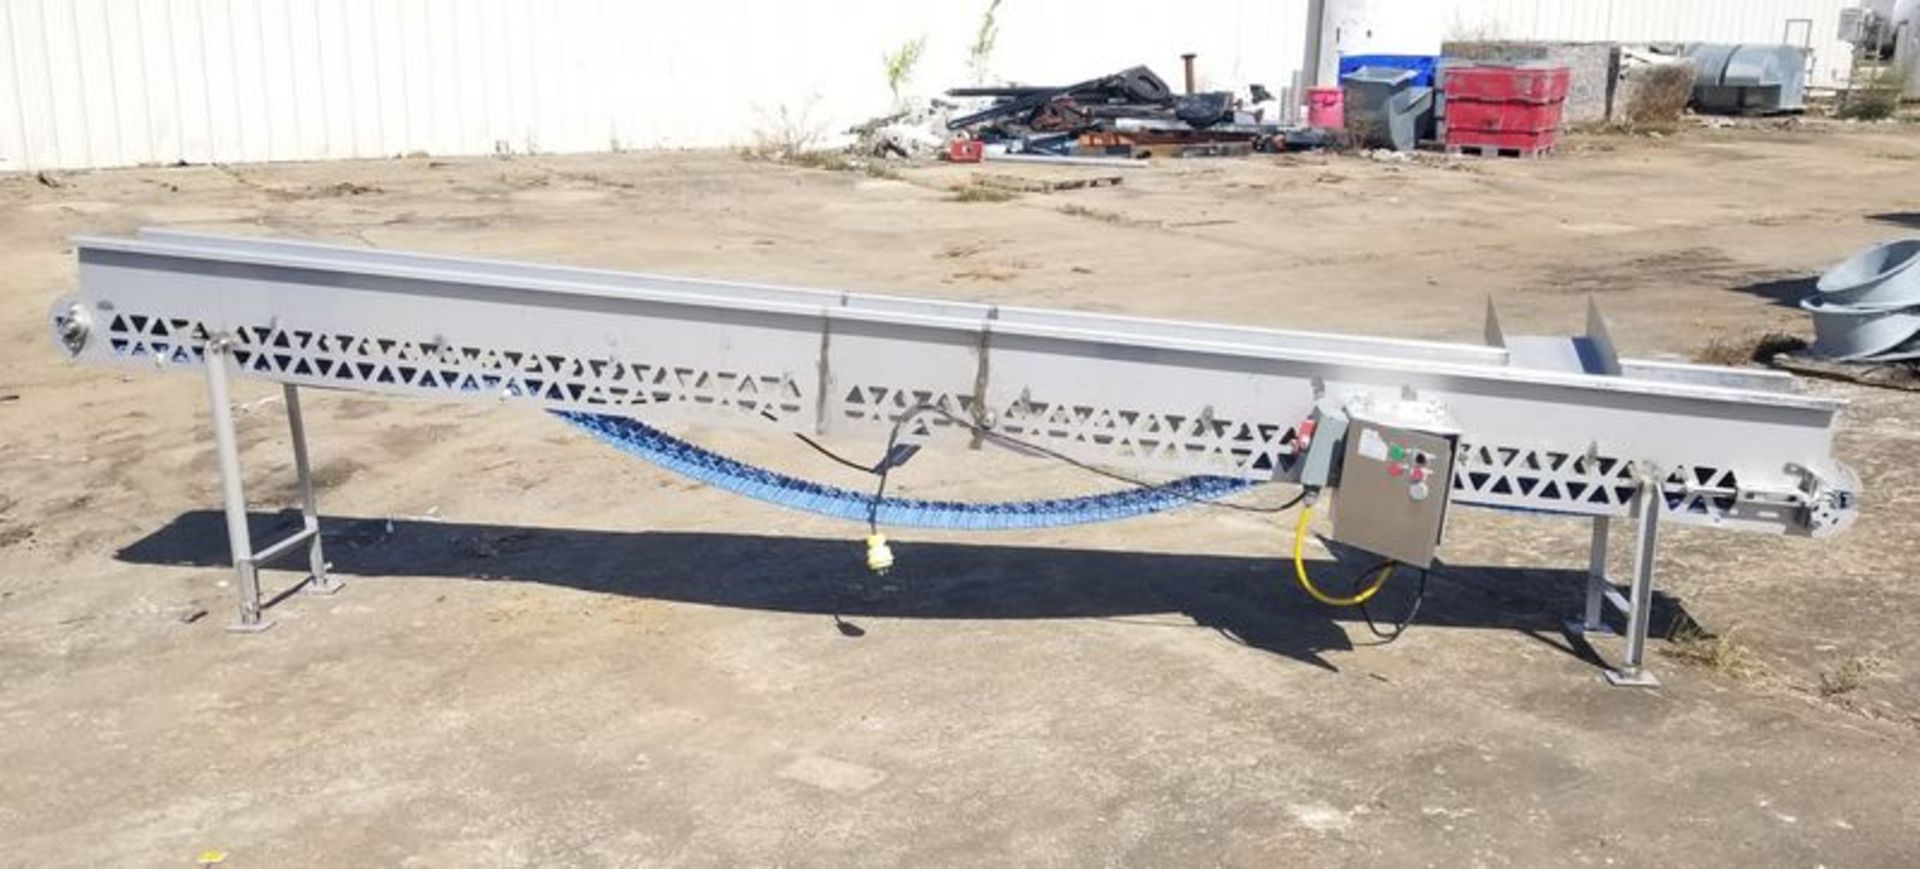 15.5' Long Blue Belt Conveyor - Image 2 of 4